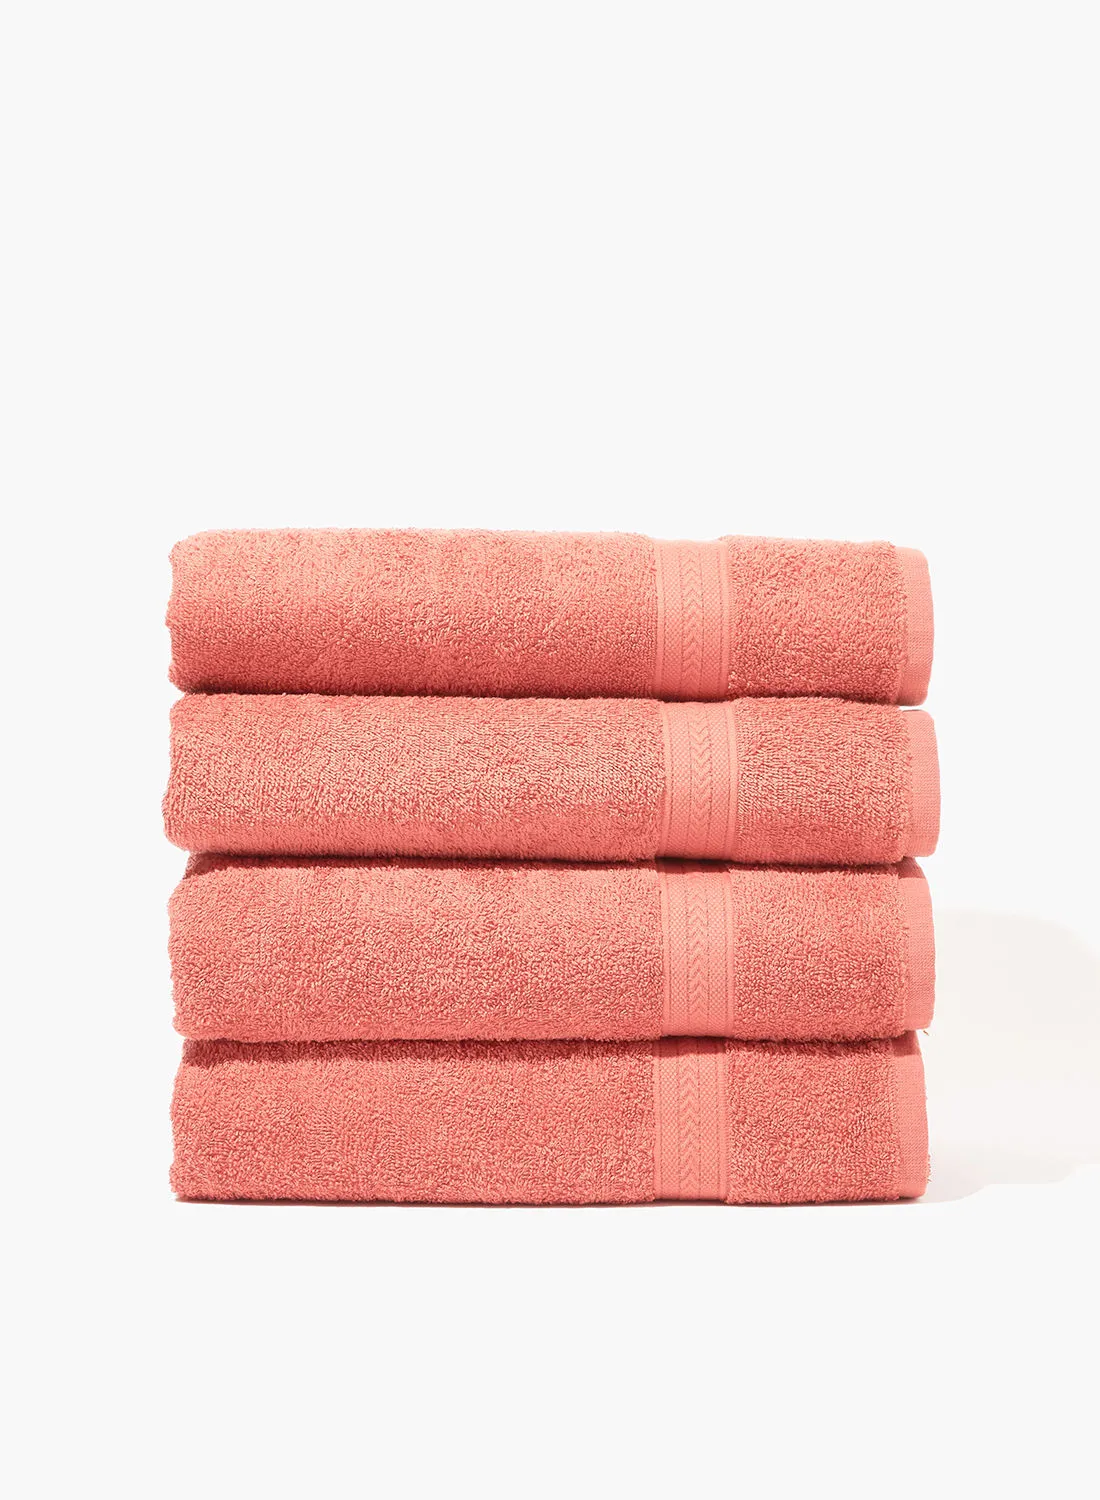 Amal 4 Piece Bathroom Towel Set - 400 GSM 100% Cotton Terry - 4 Bath Towel - Pink Color -Quick Dry - Super Absorbent